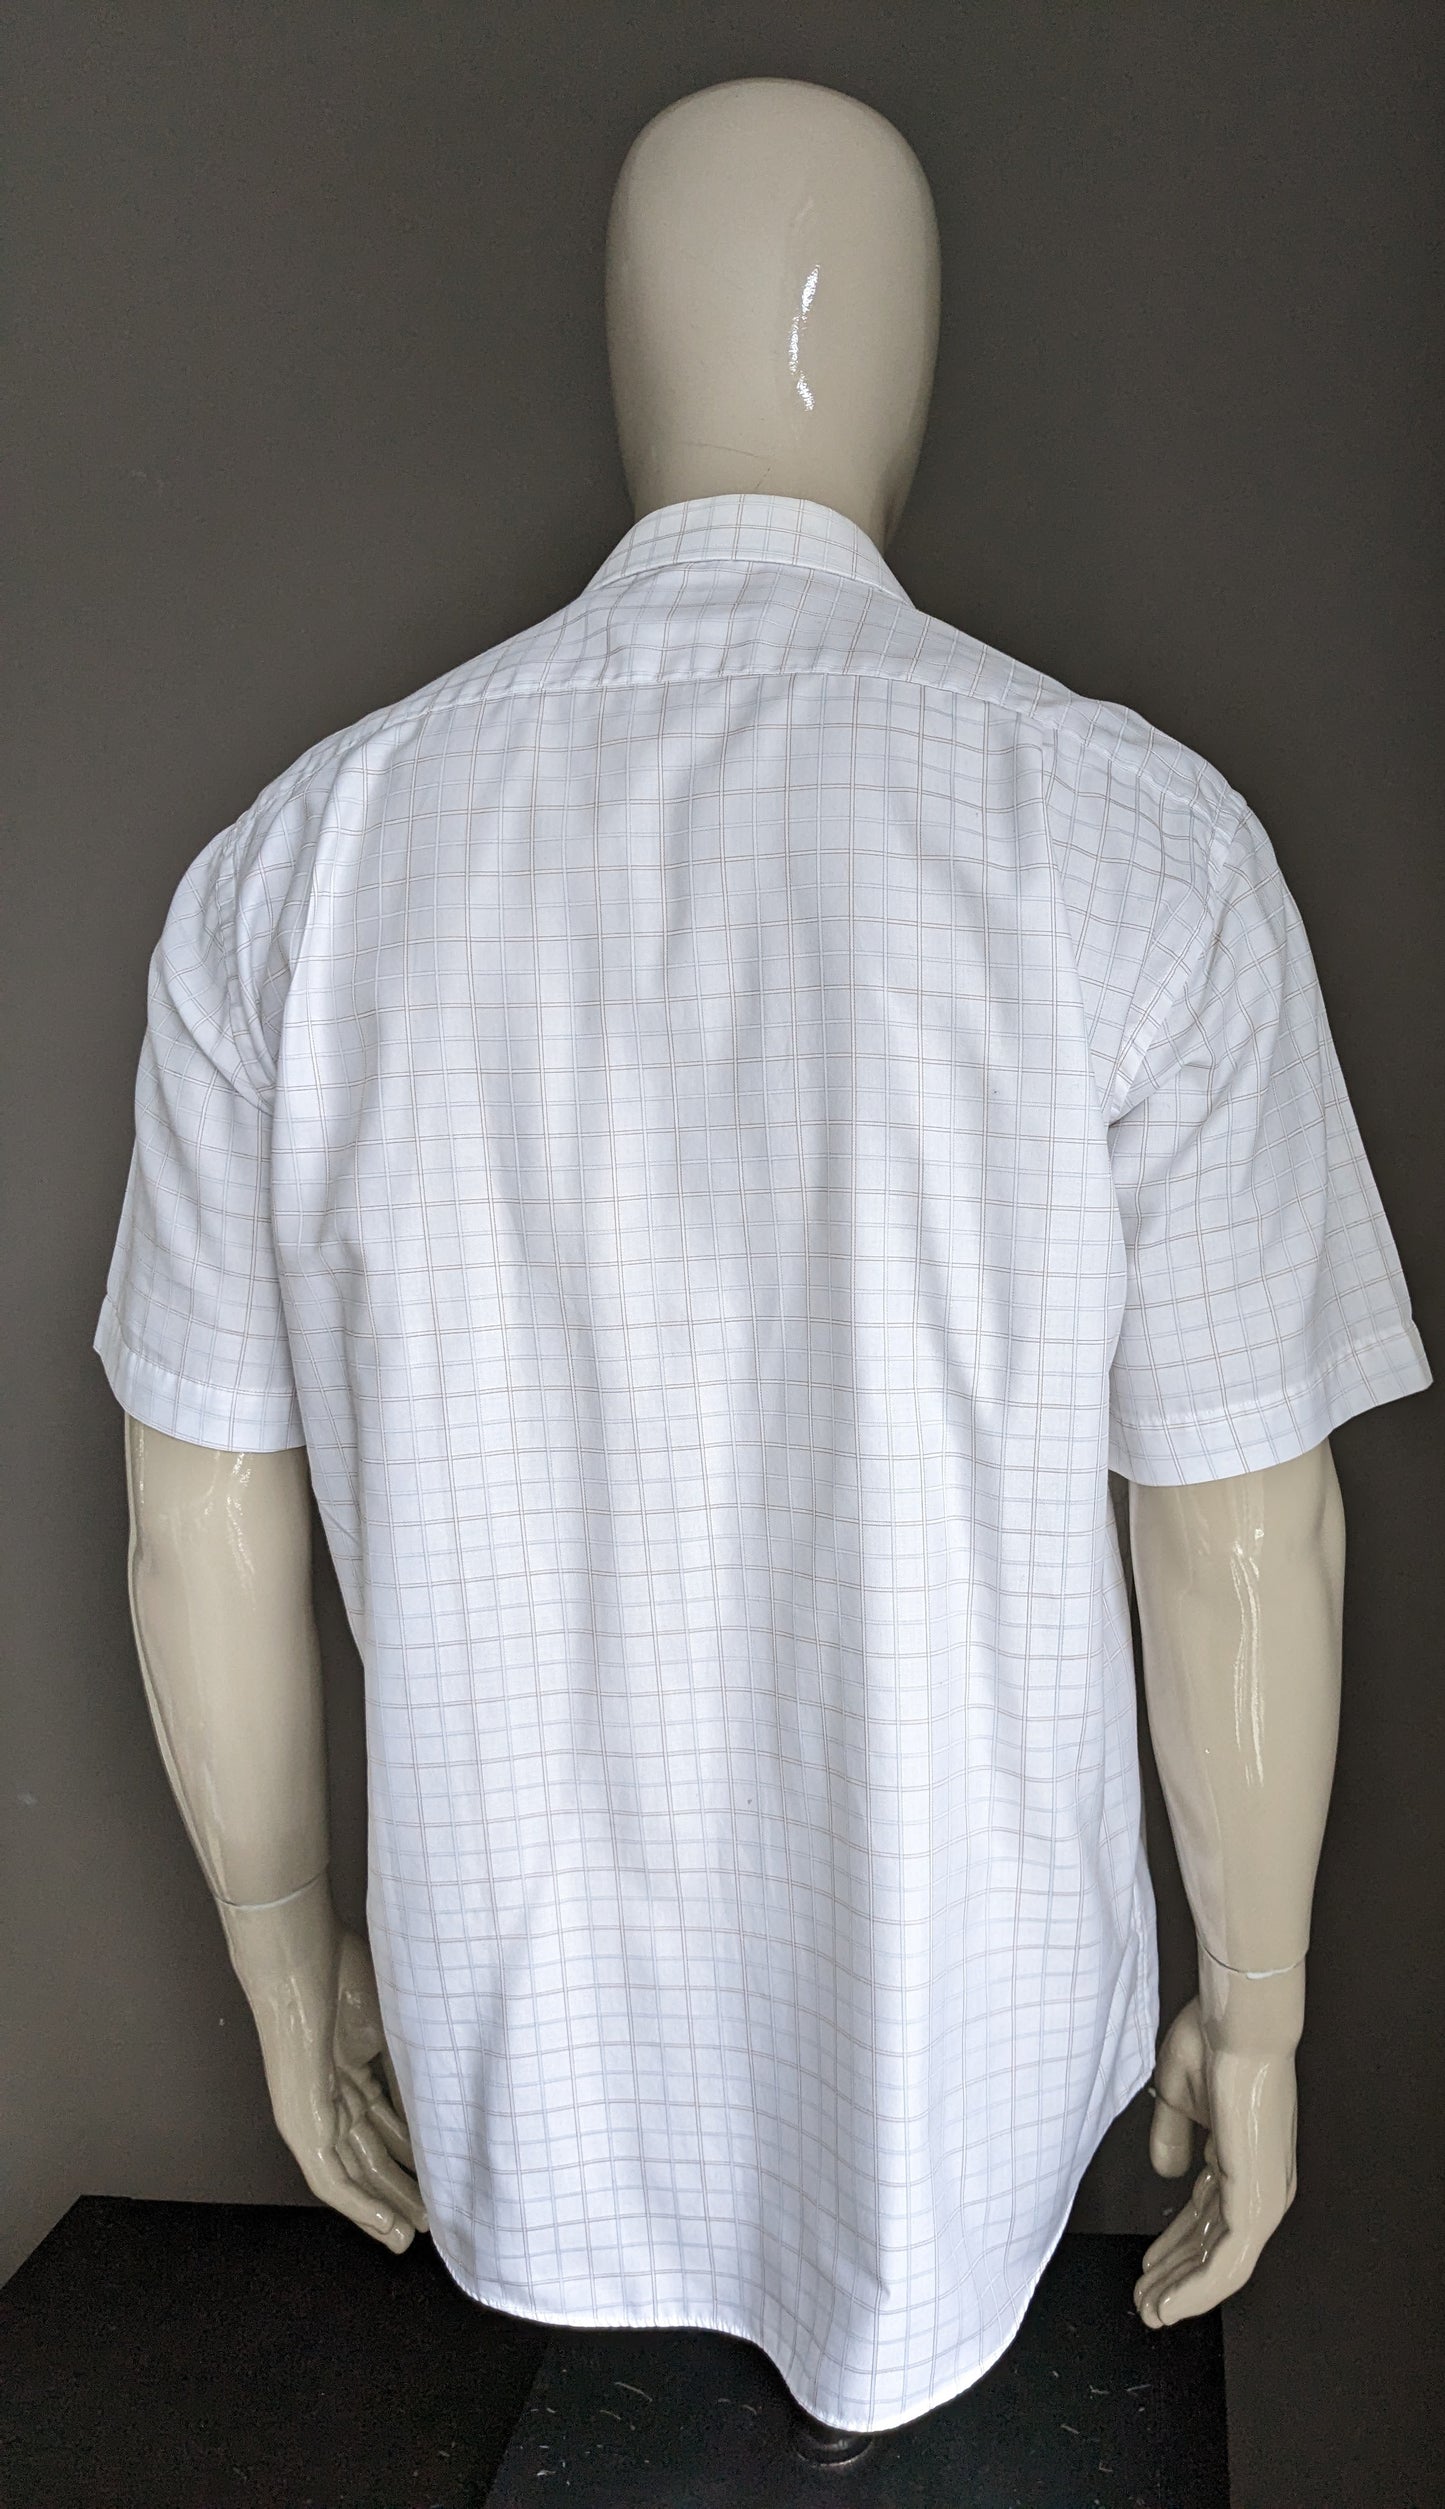 Marks & Spencer Sailoring Shirt manga corta. Línea de marrón azul blanco. Tamaño 42 / L.